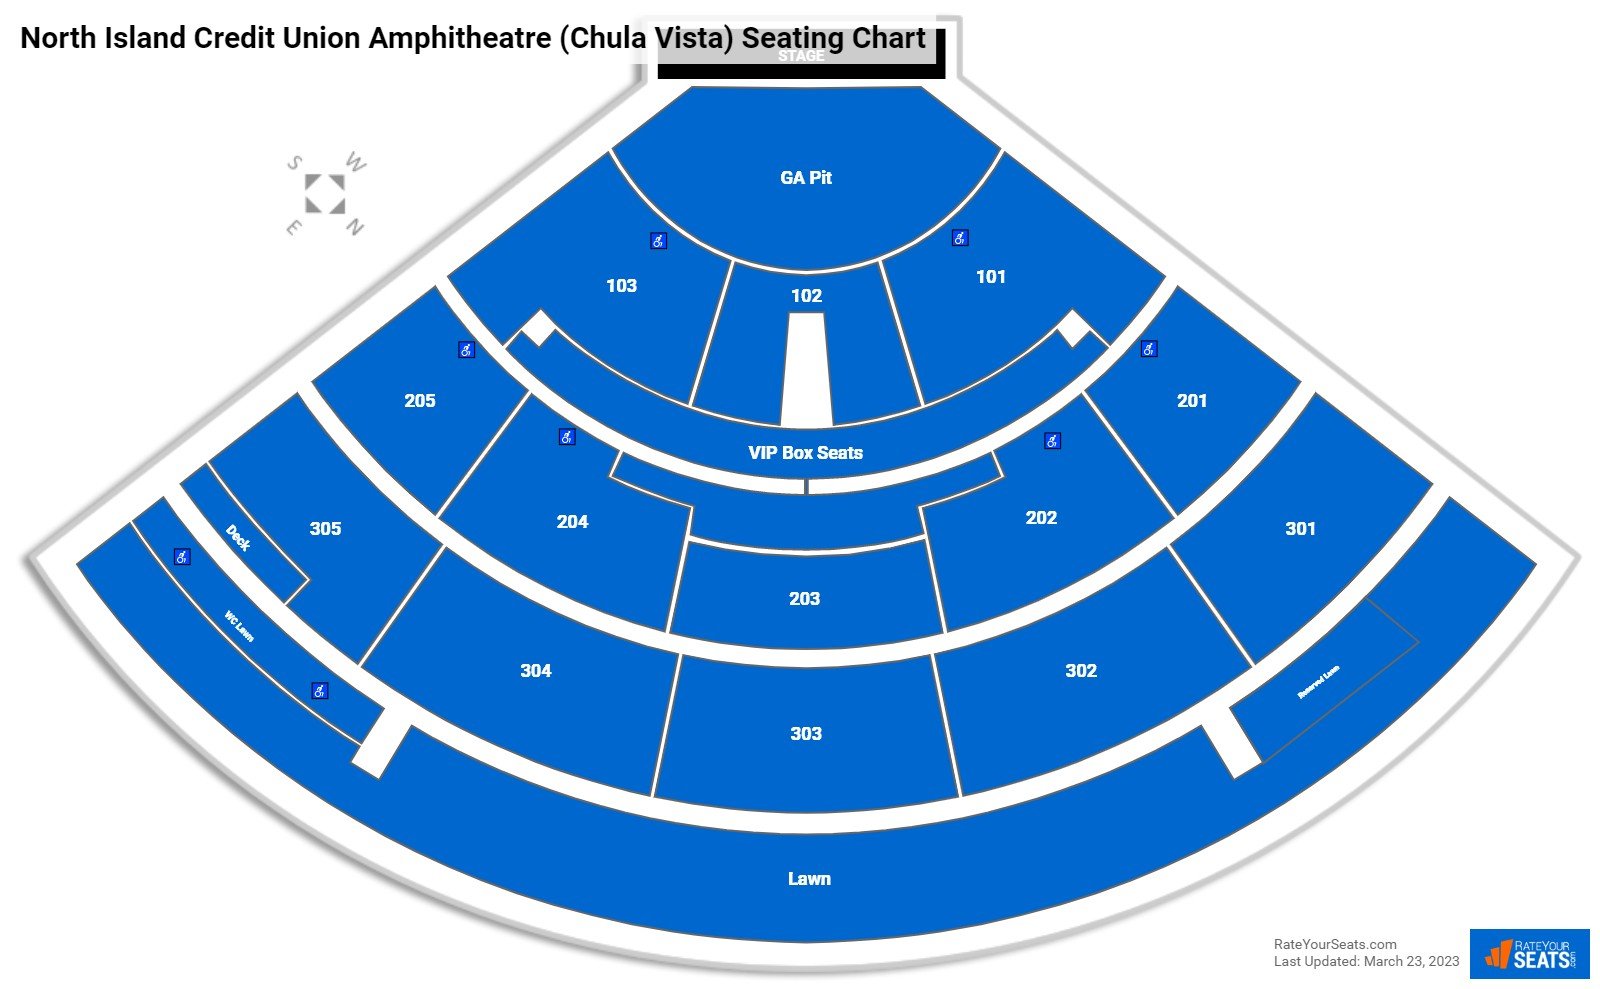 North Island Credit Union Amphitheatre (Chula Vista) Concert Seating Chart